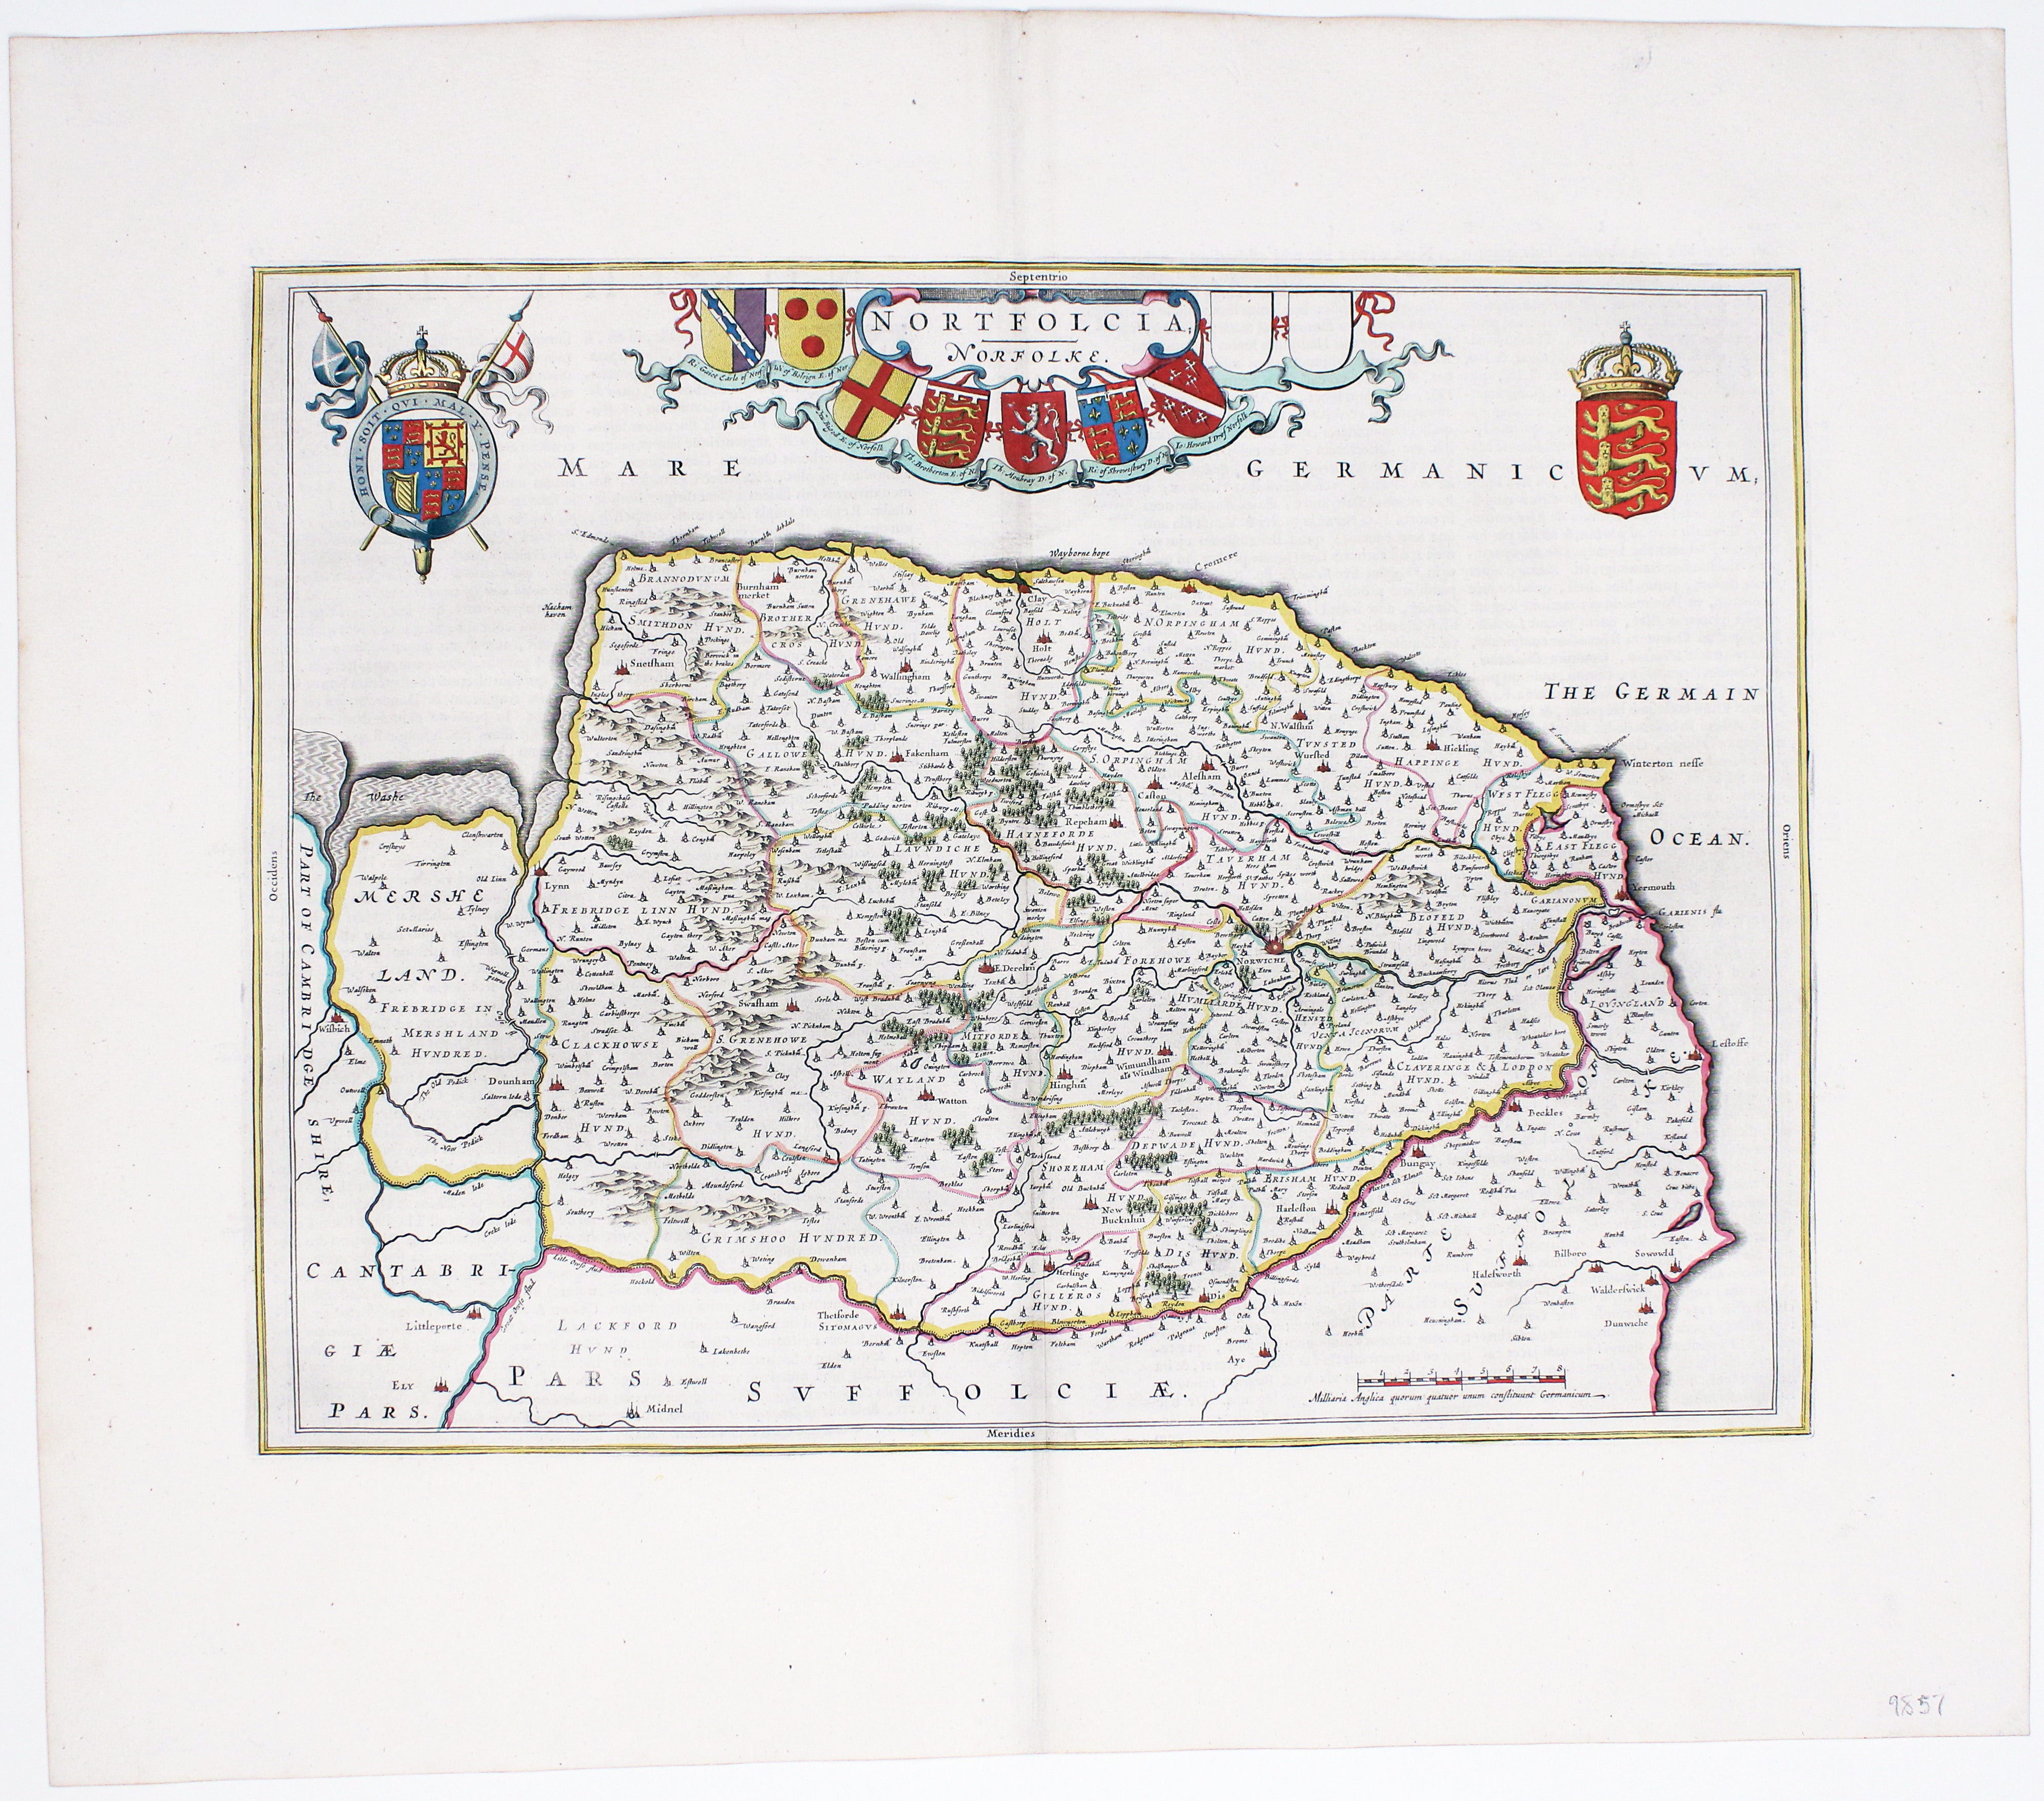 Blaeu's Map of Norfolk